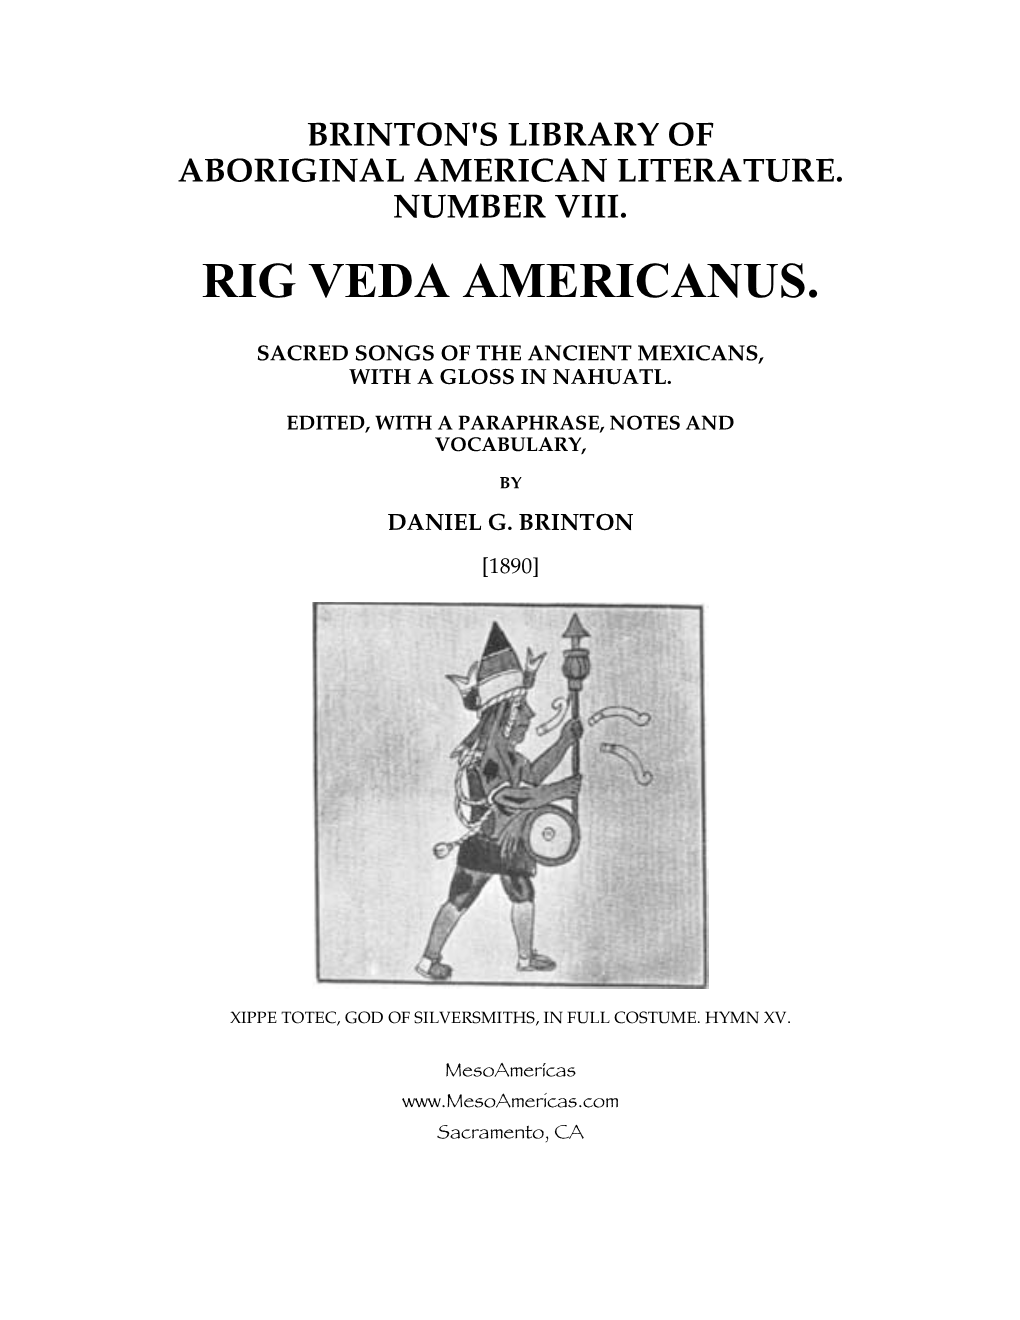 Rig Veda Americanus